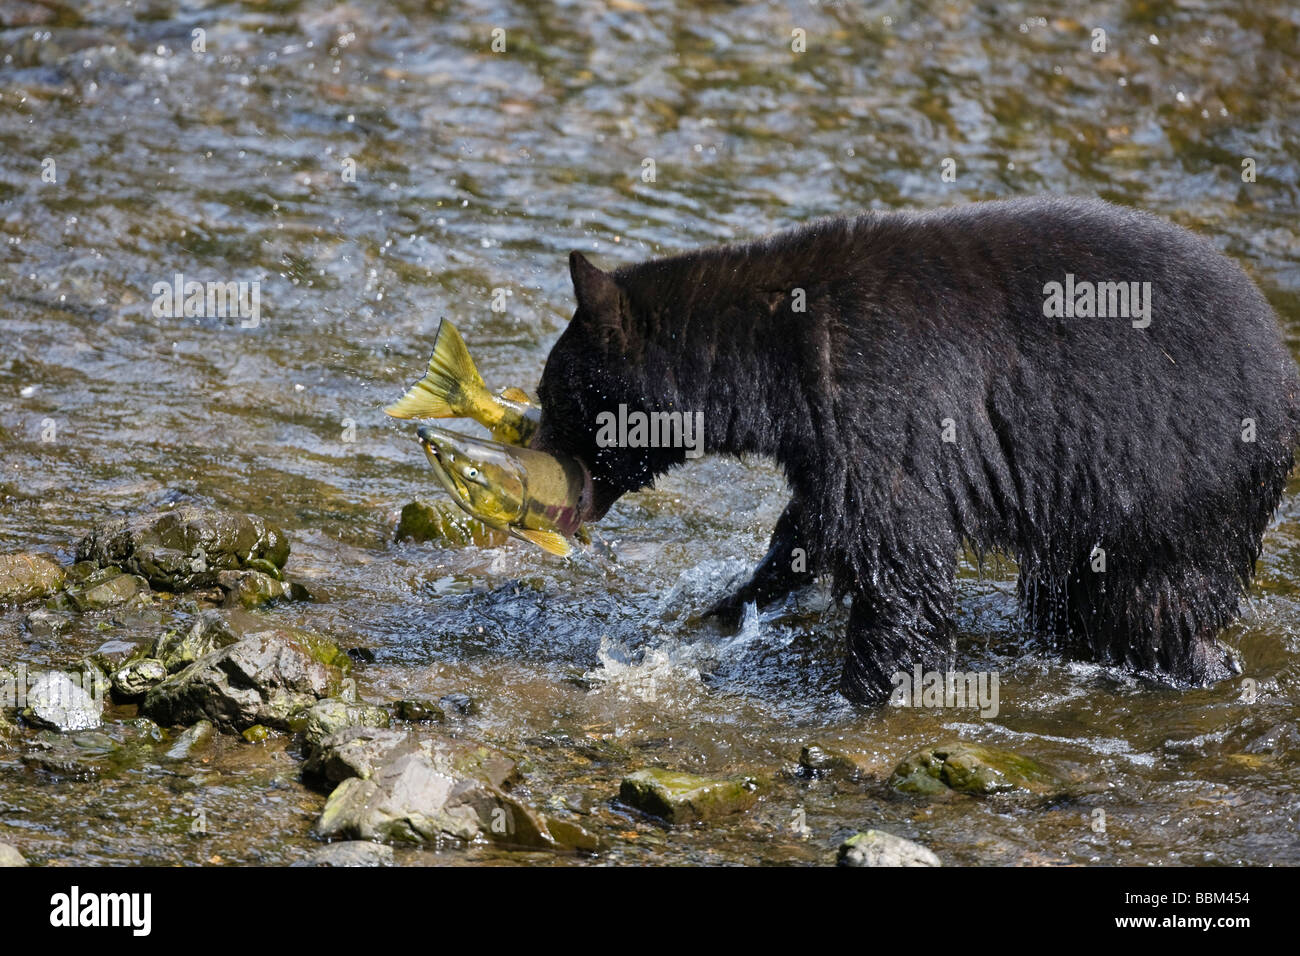 black-bear-ursus-americanus-catching-salmon-alaska-usa-BBM454.jpg